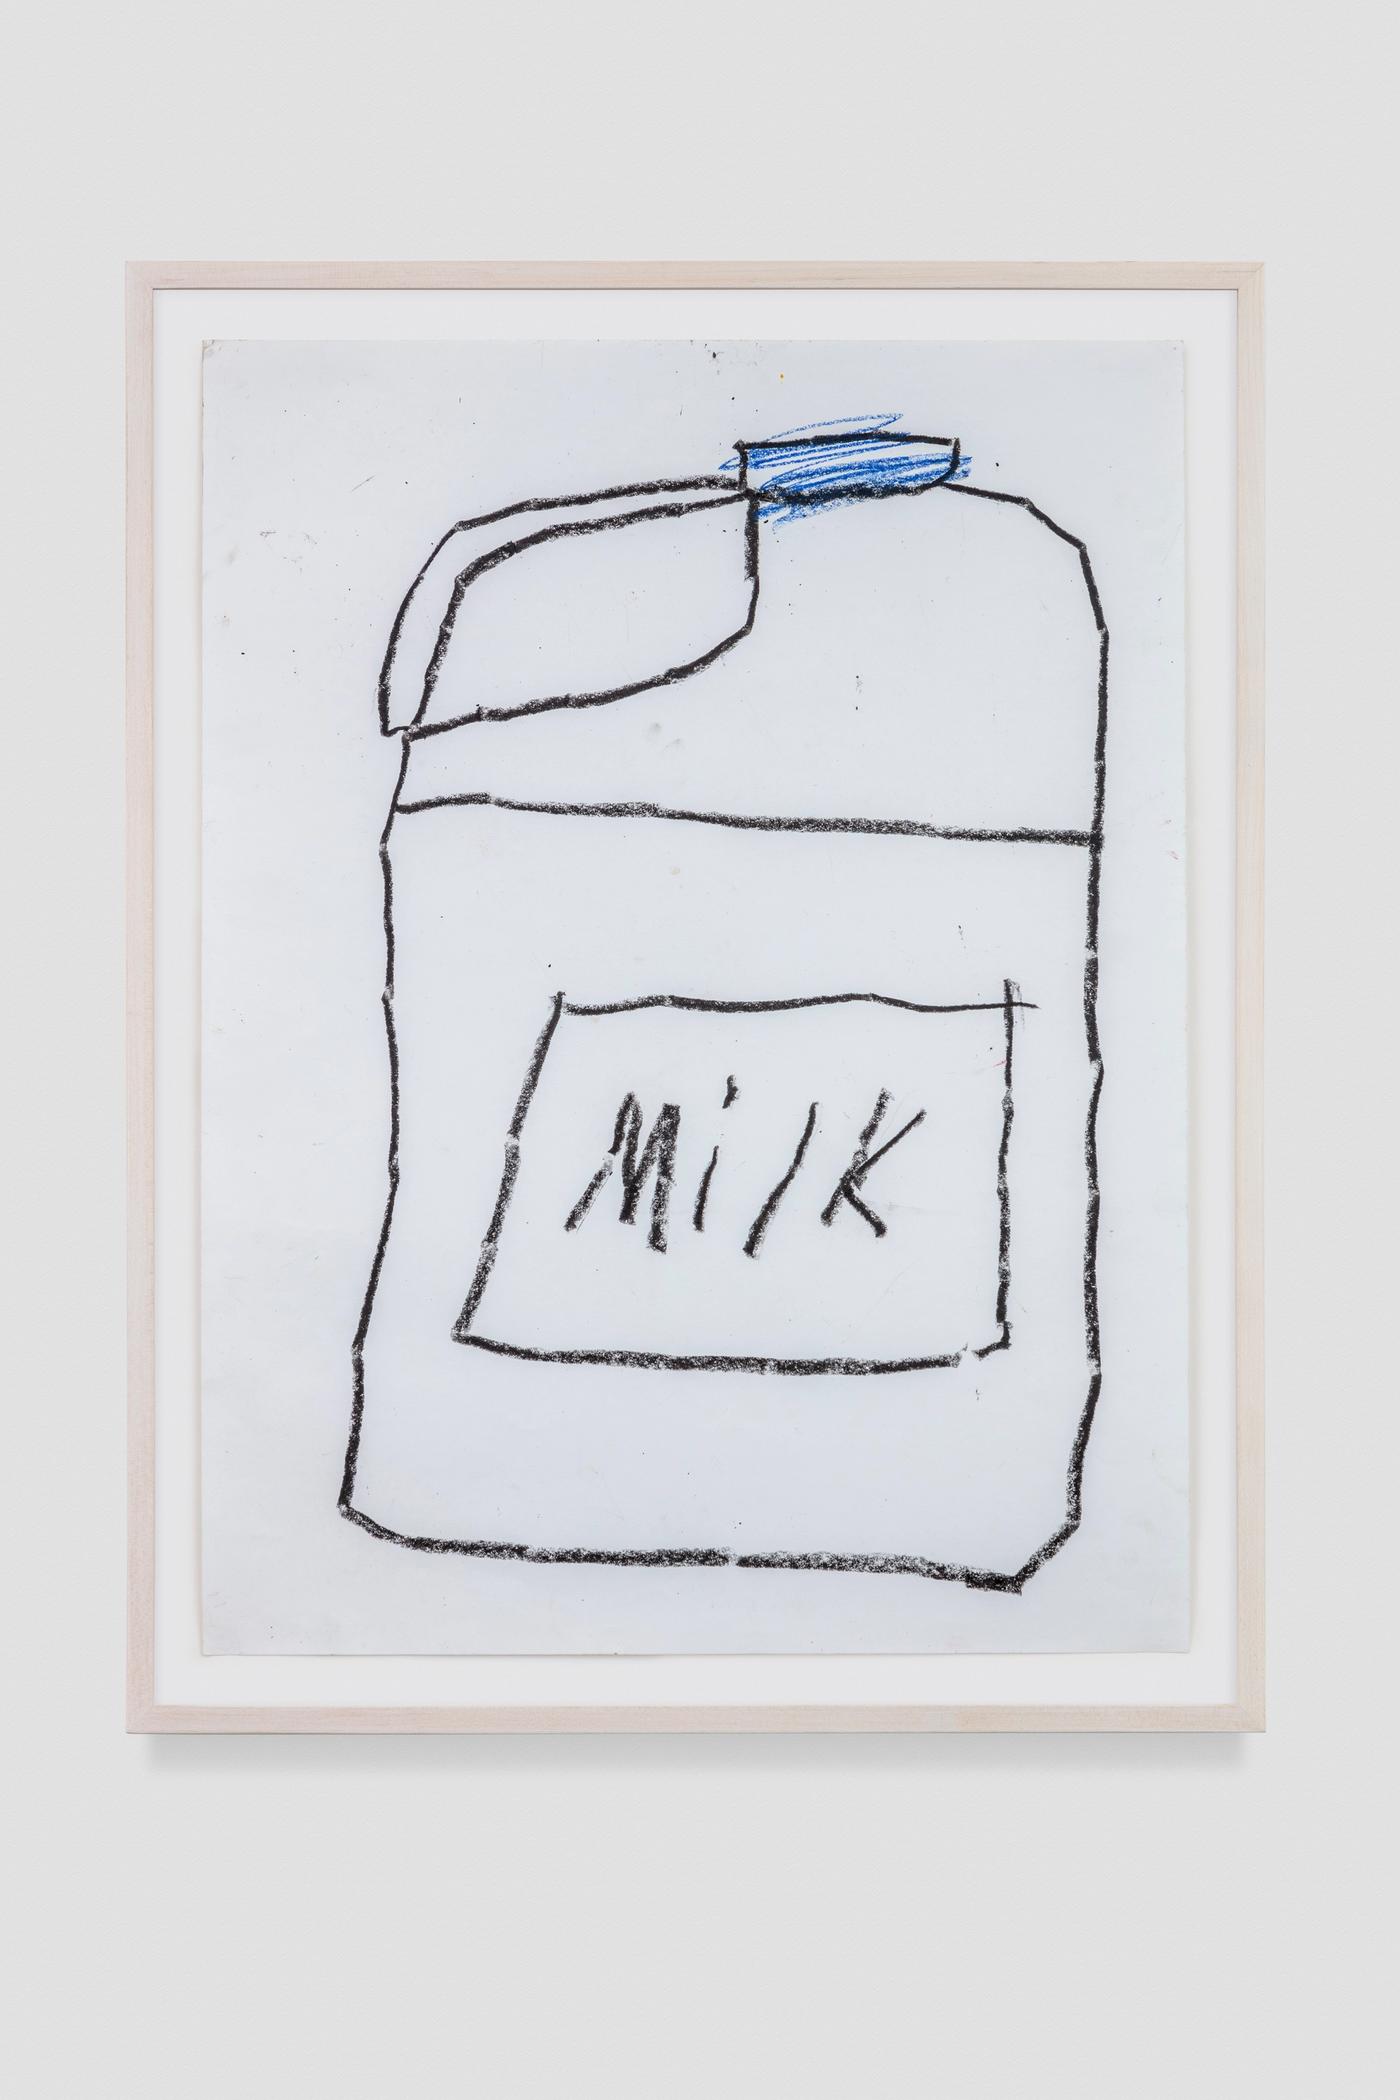 Image of Milk, 2021: Oil pastel on paper